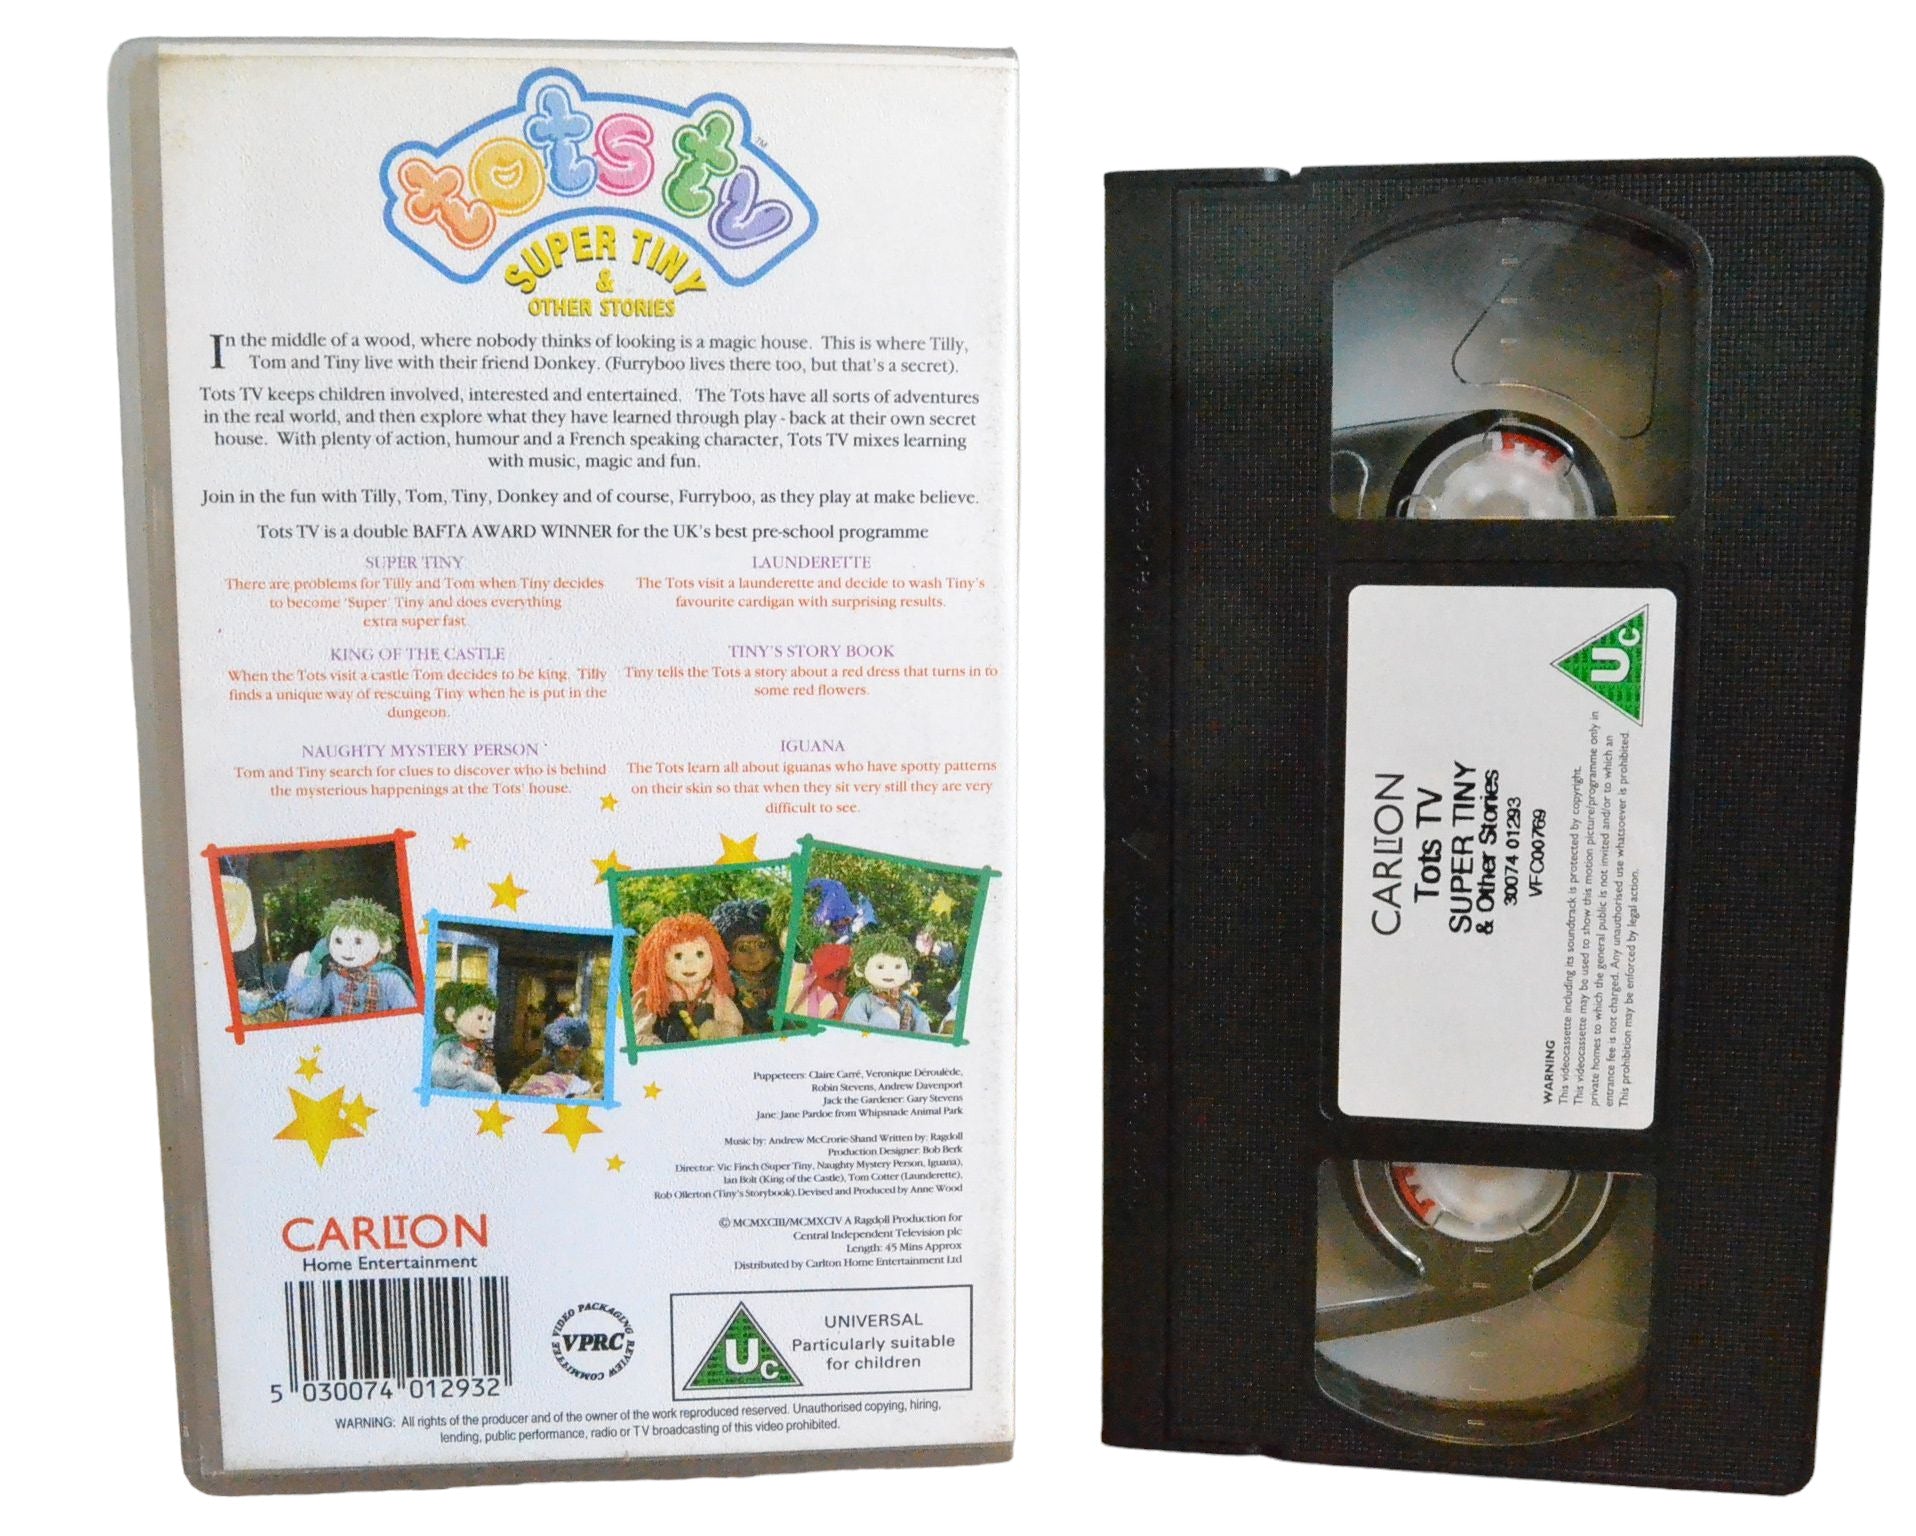 Tots Tv : Super Tiny & Other Stories - Carlton Home Entertainment - 3007401293 - Children - Pal - VHS-